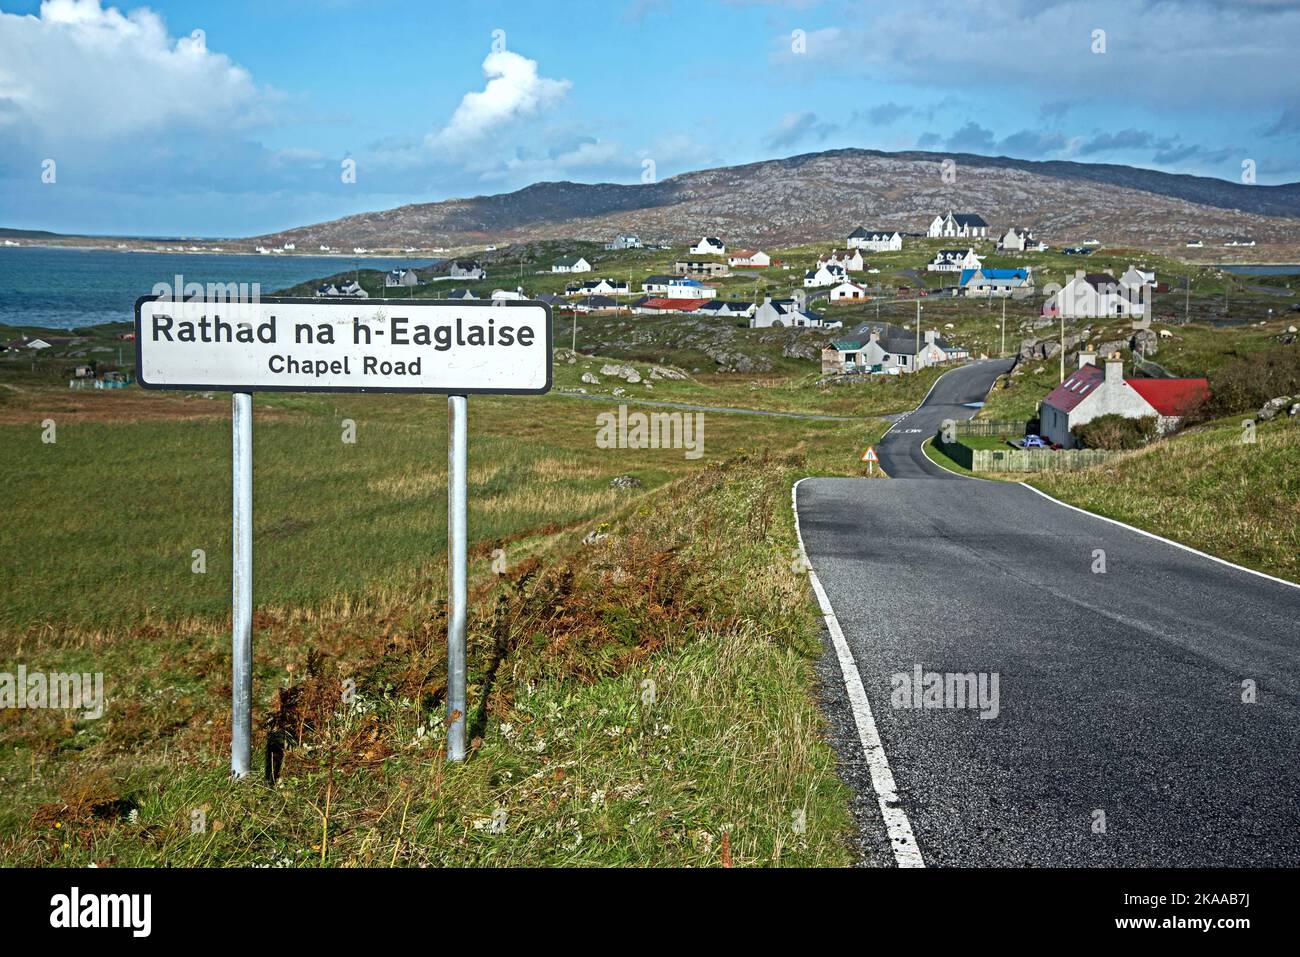 Chapel Road, Rathad na h-Eaglaise, leading to the village, Am Baile, on the Isle of Eriskay, Outer Hebrides, Scotland, UK. Stock Photo